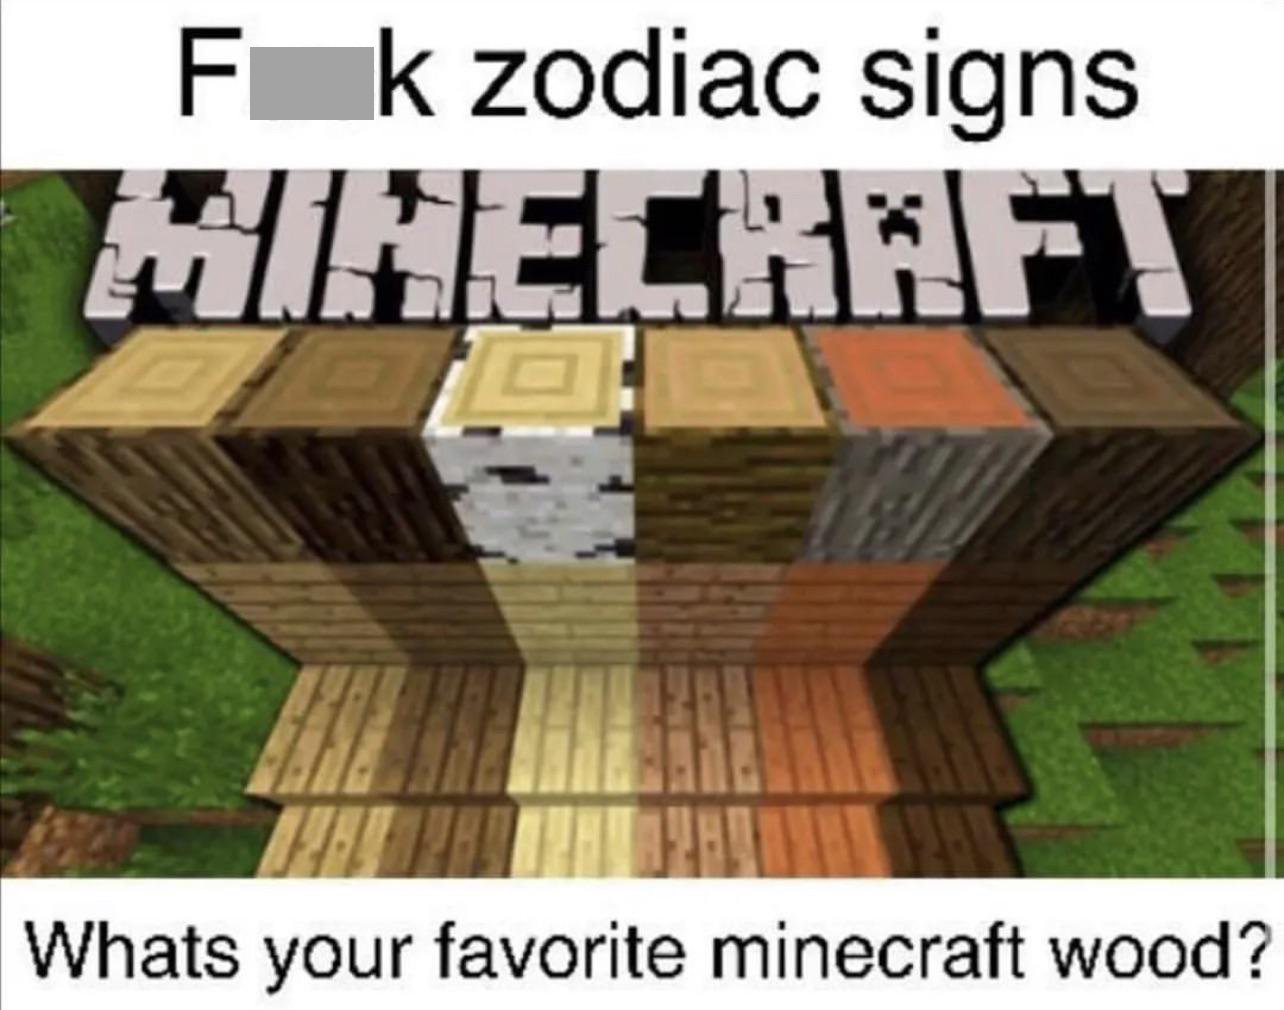 funny memes - minecraft wood types - Fk zodiac signs Minecraft Whats your favorite minecraft wood?